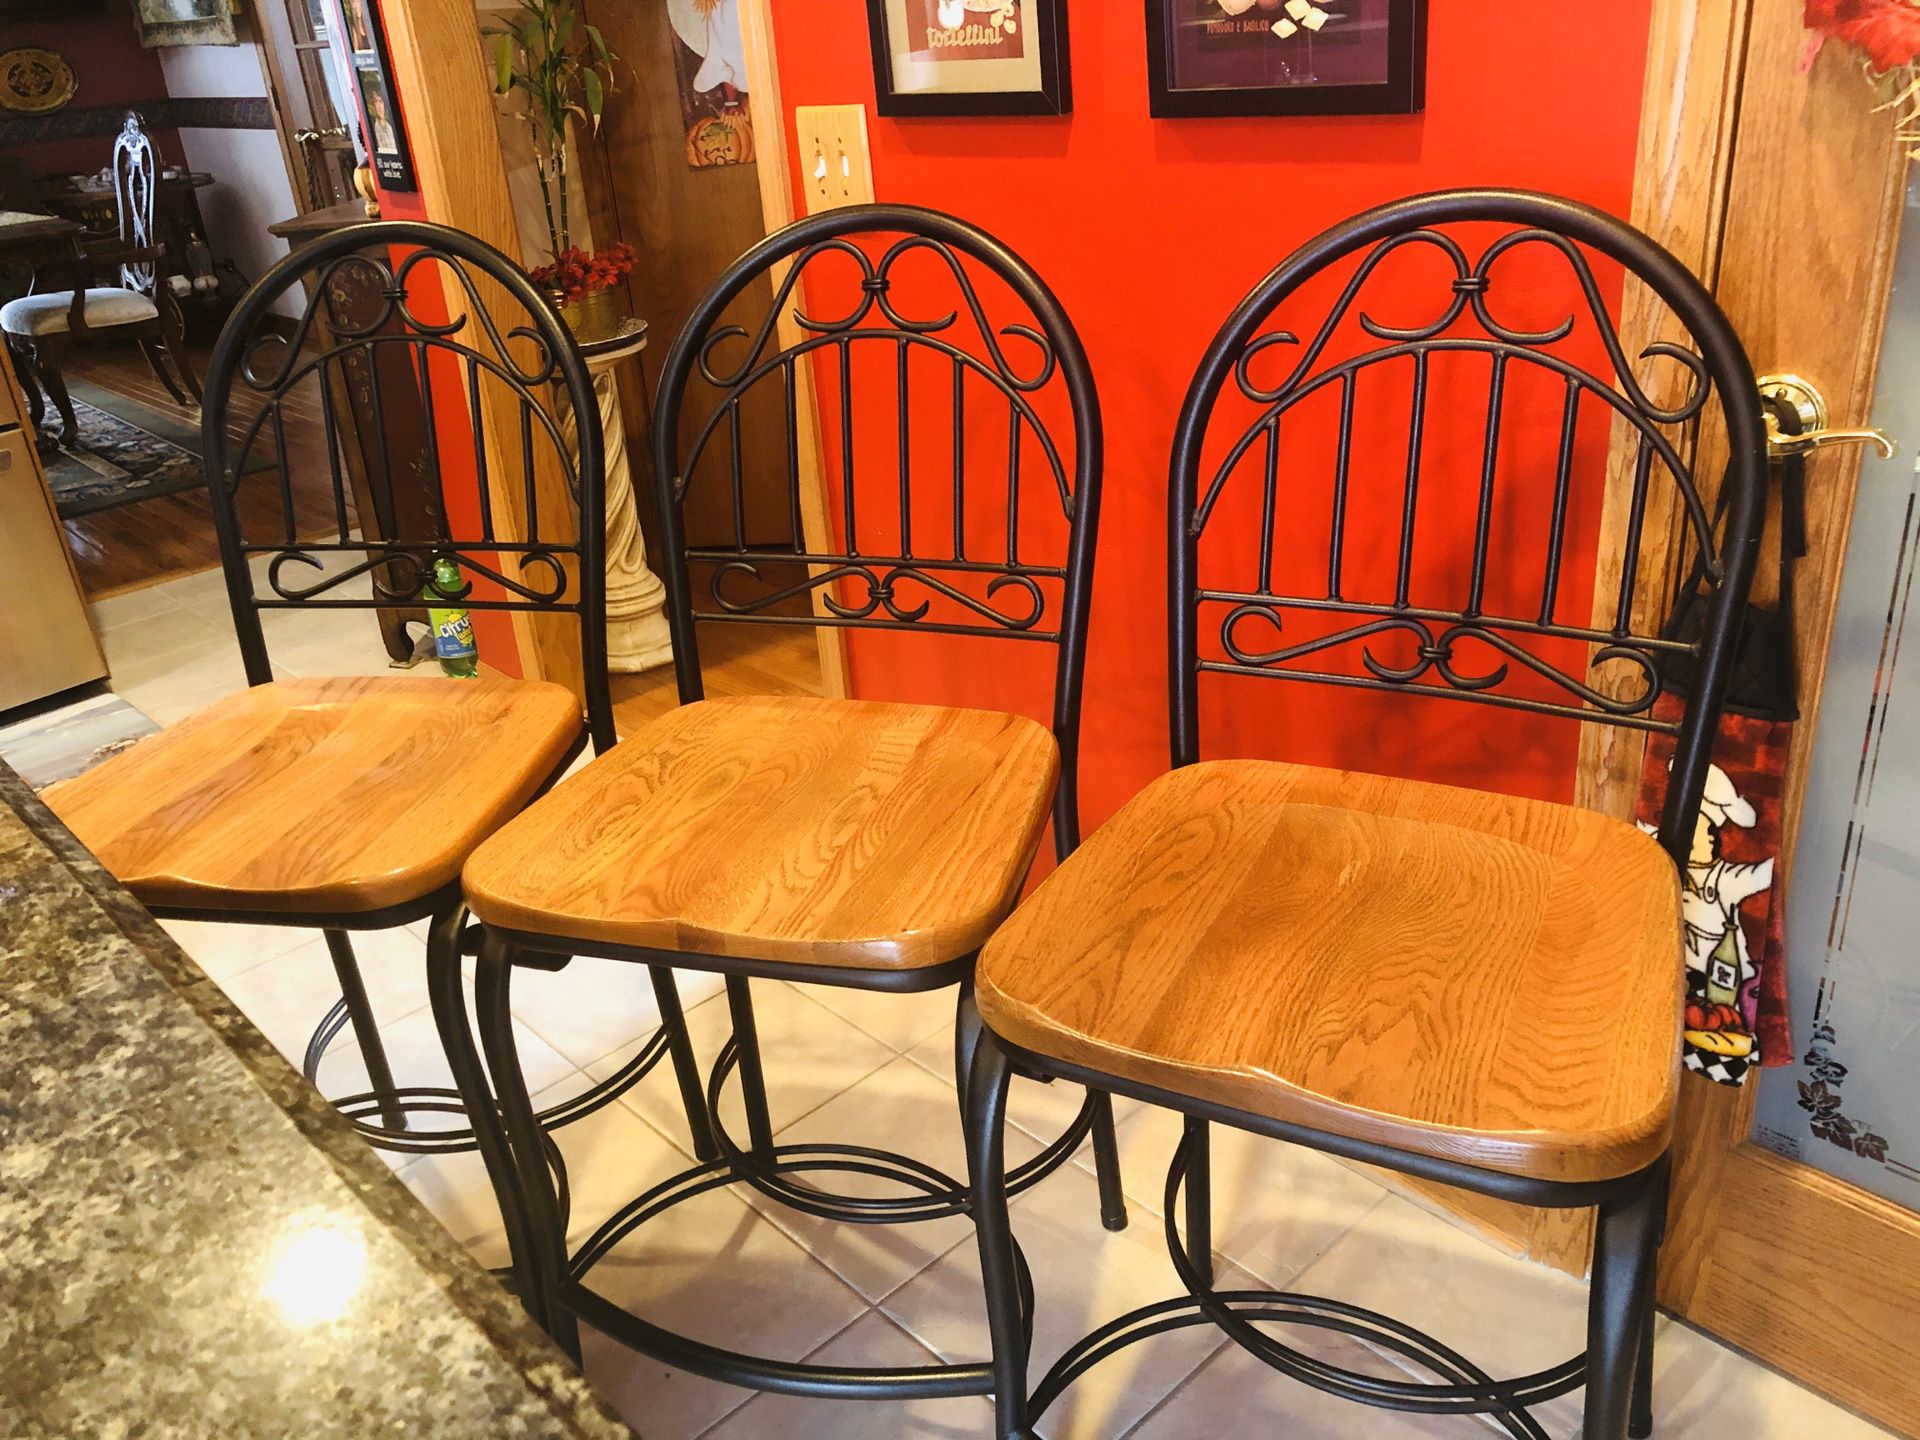 3 bar stools